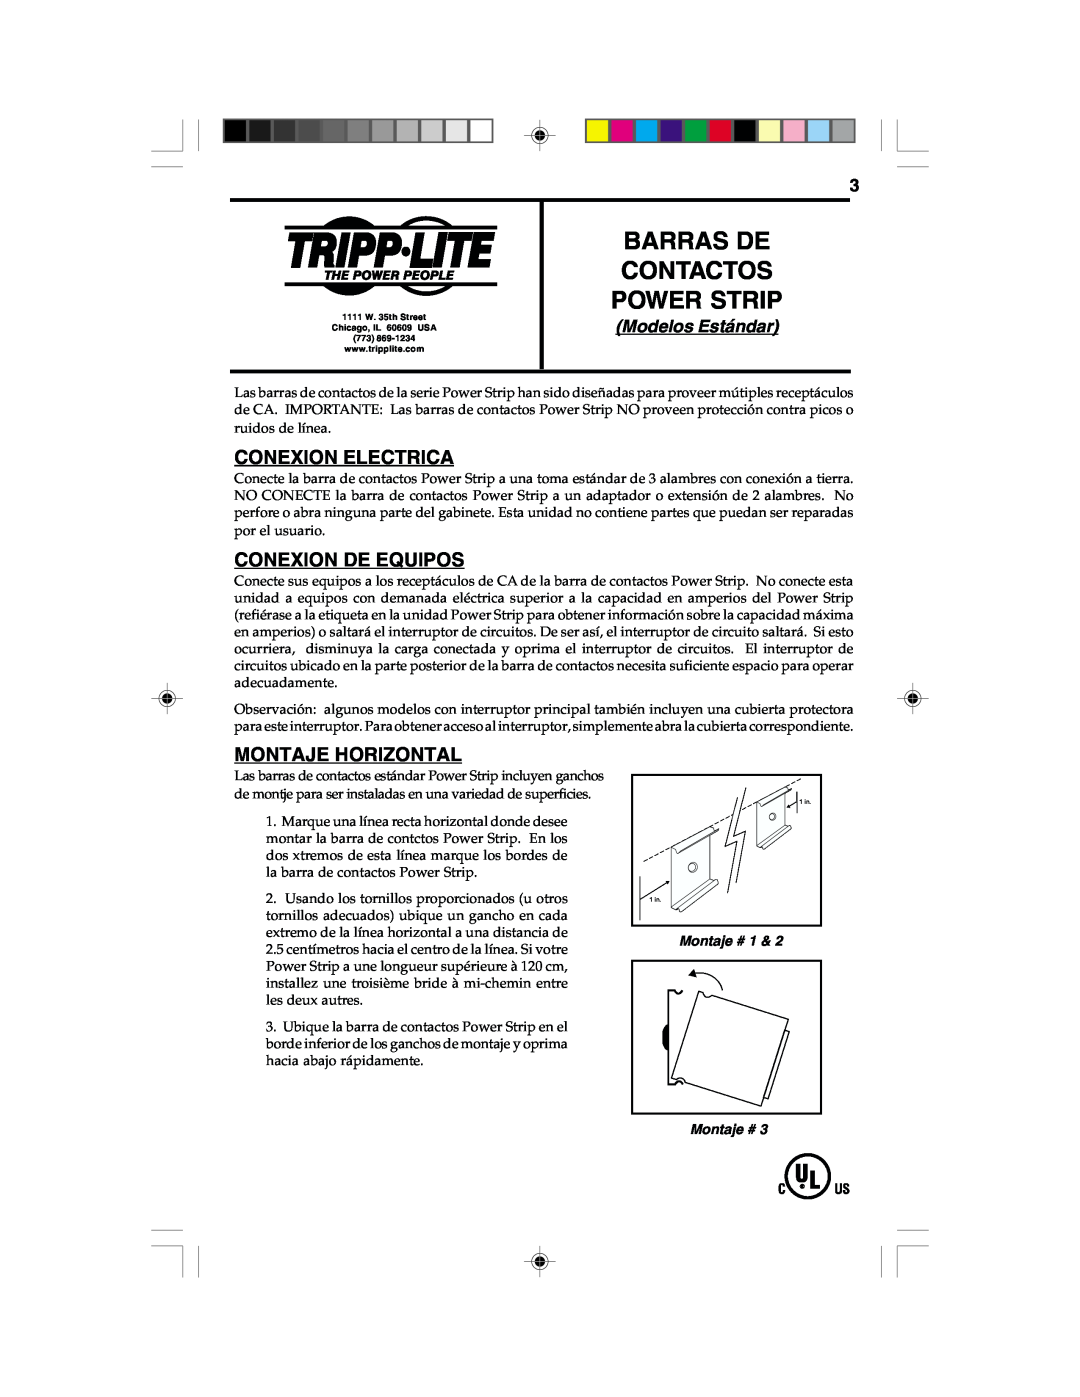 Tripp Lite Surge Protector user service Barras De Contactos Power Strip, Modelos Estándar, Montaje # 1, Conexion Electrica 